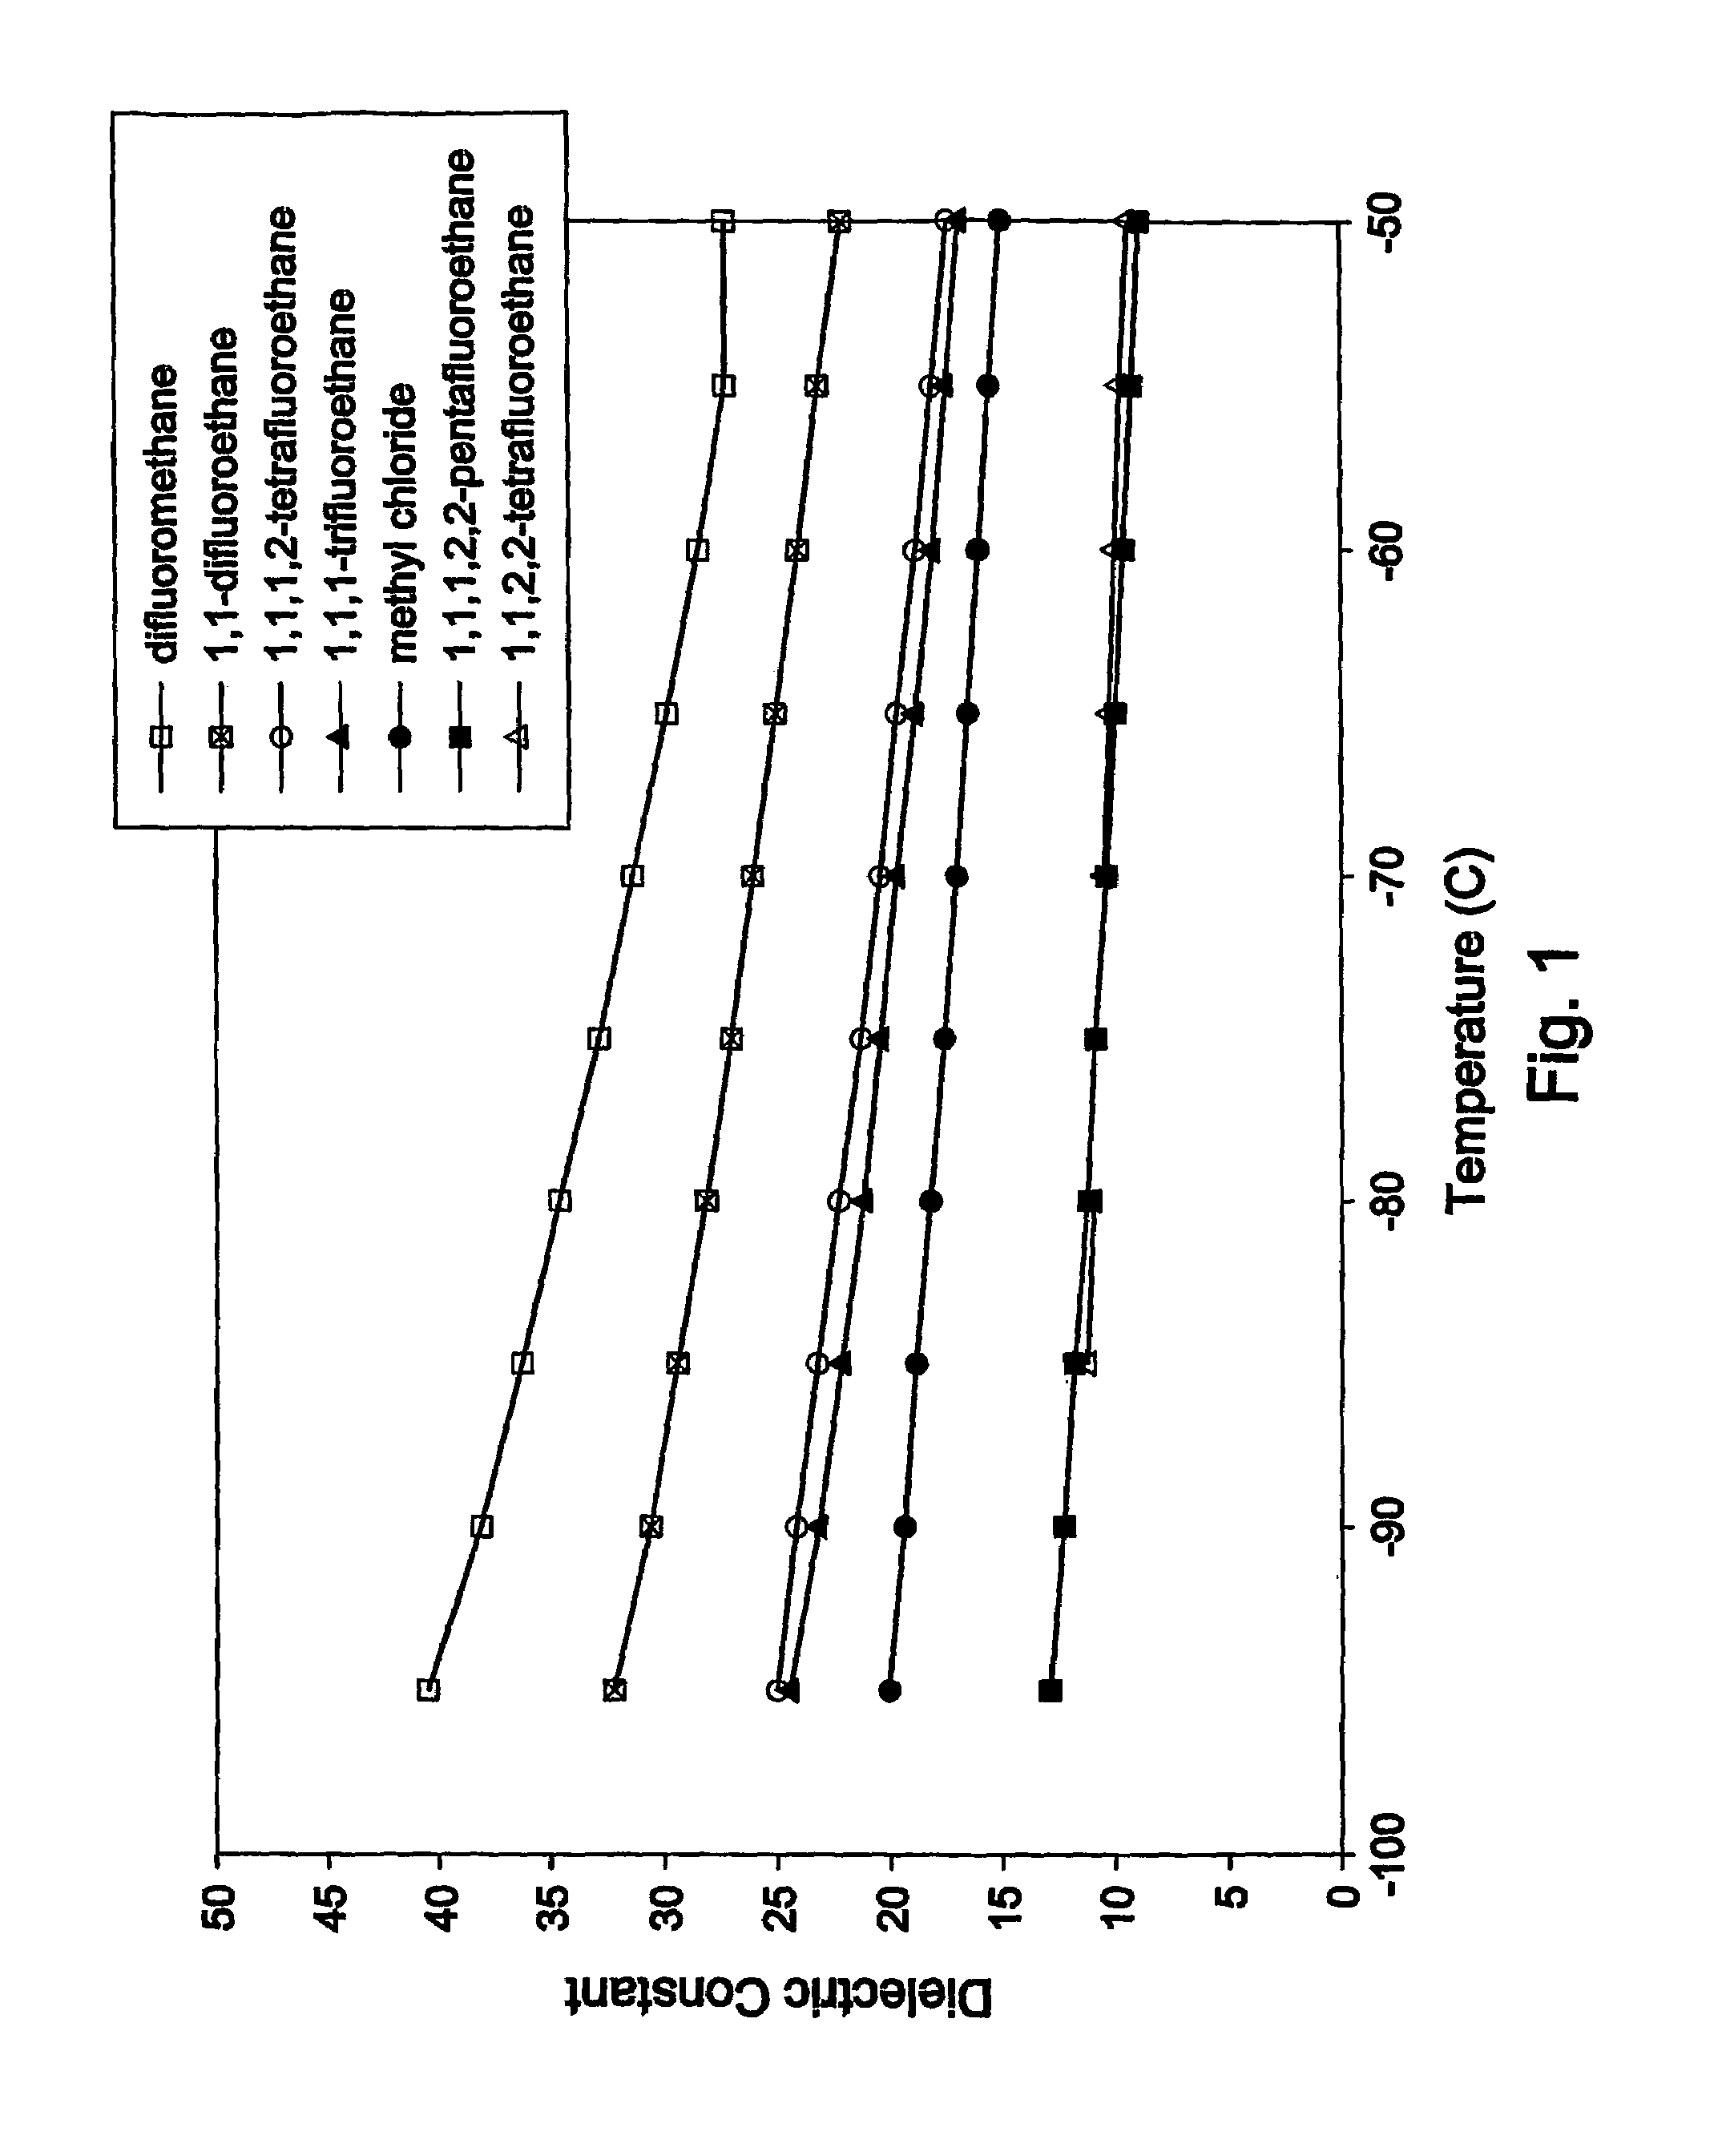 Polymerization processes